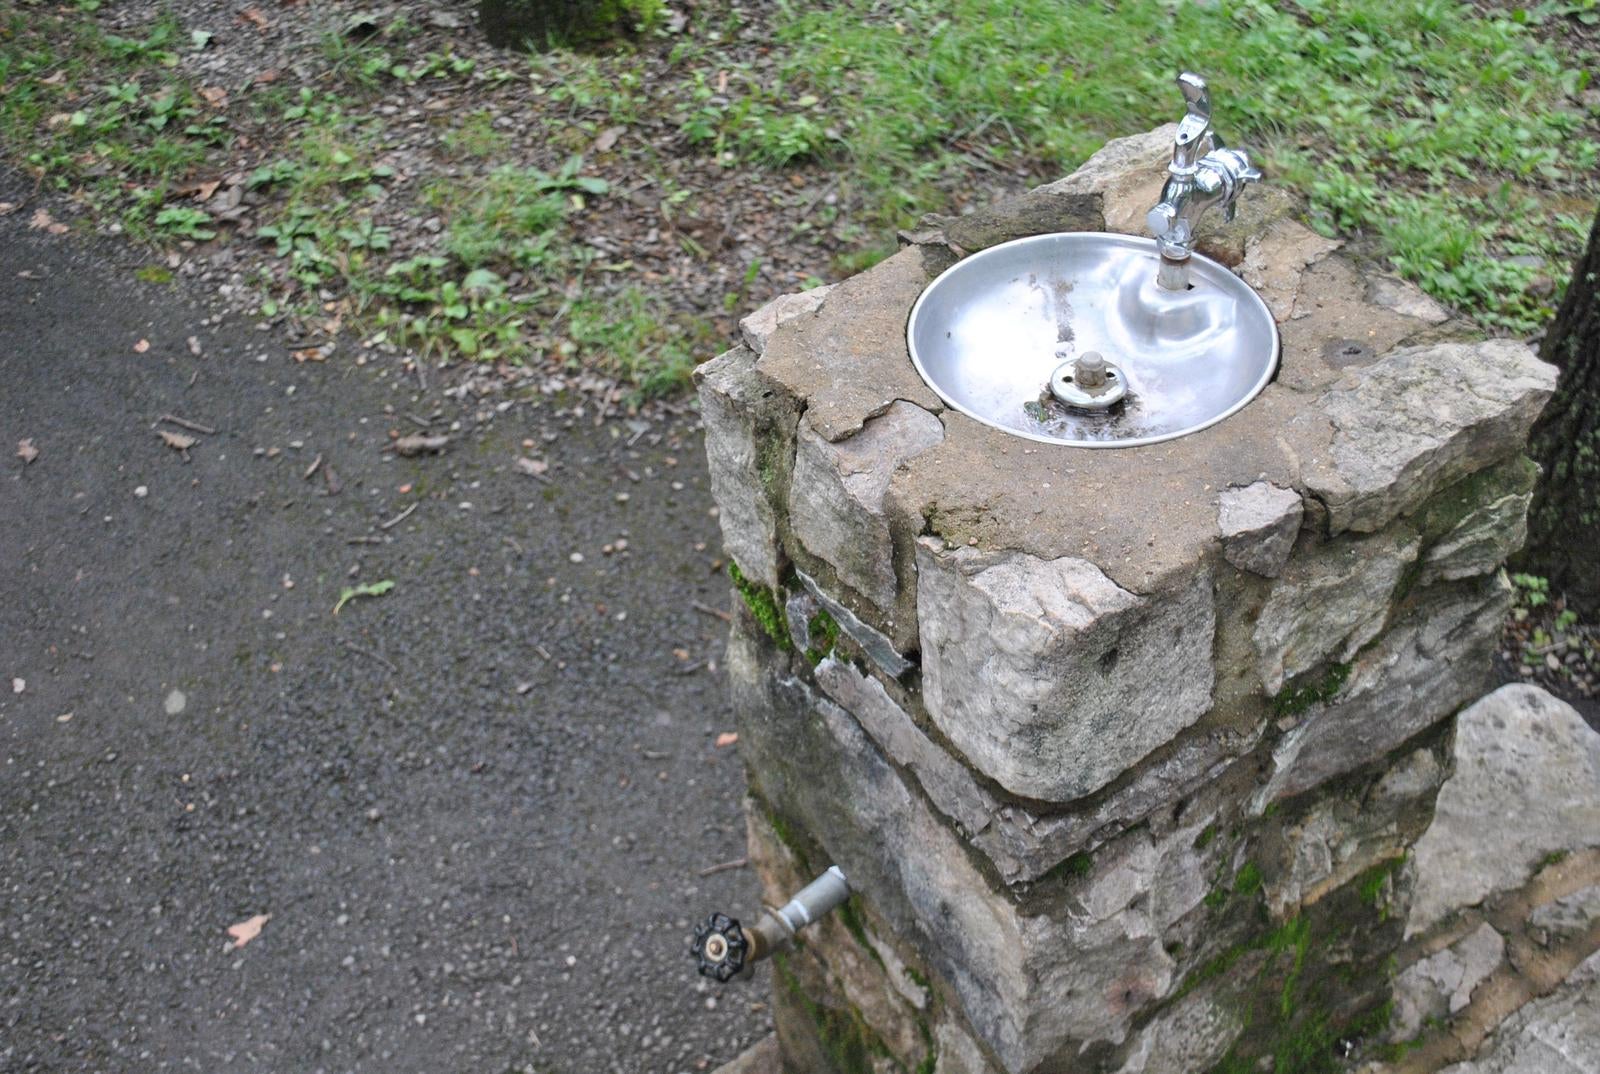 Mathews Arm Campground Water Fountain and Spigot



Credit: